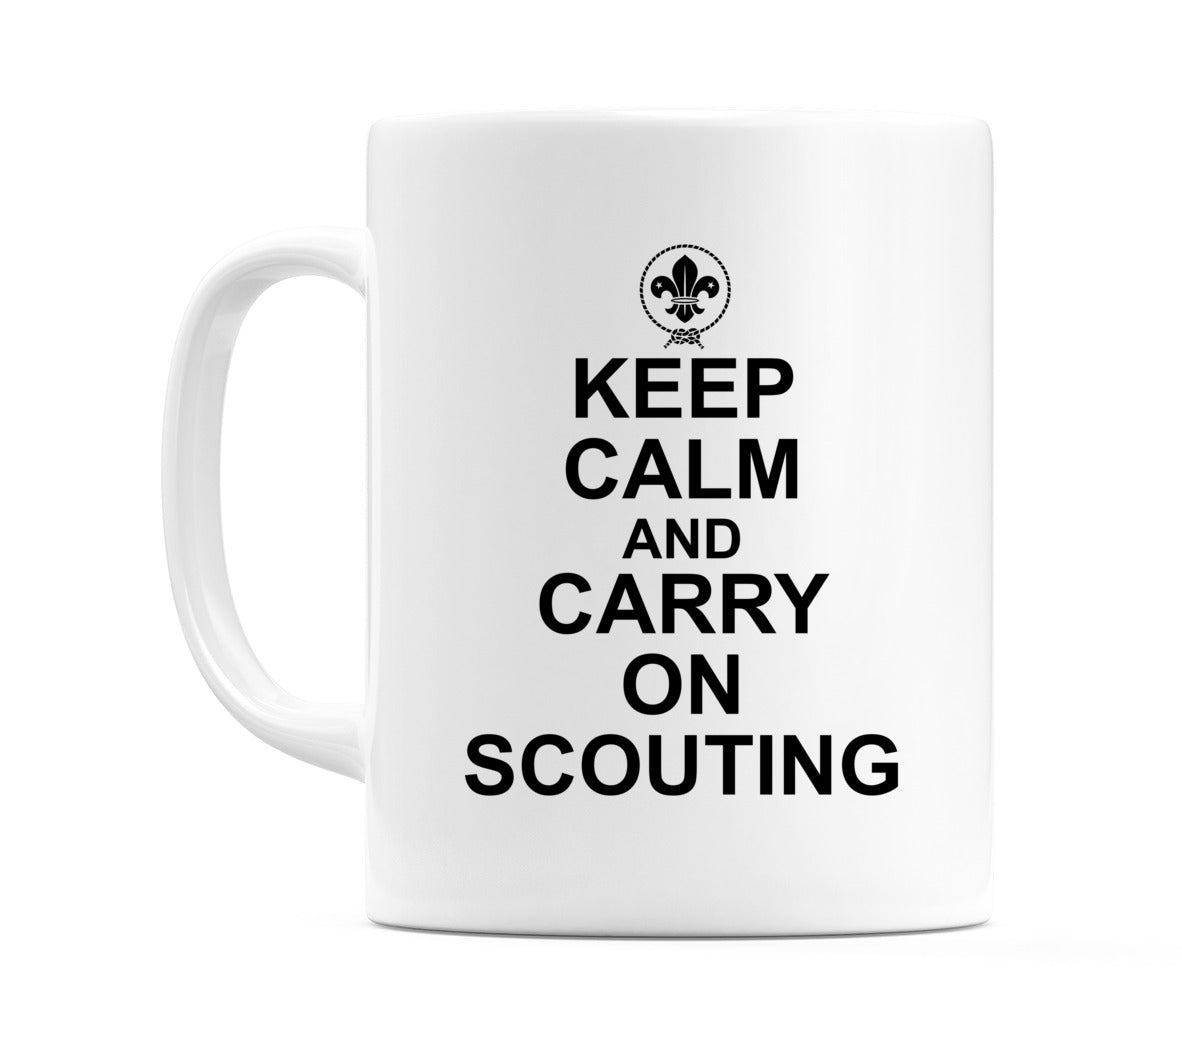 Keep Calm and Carry on Scouting Mug